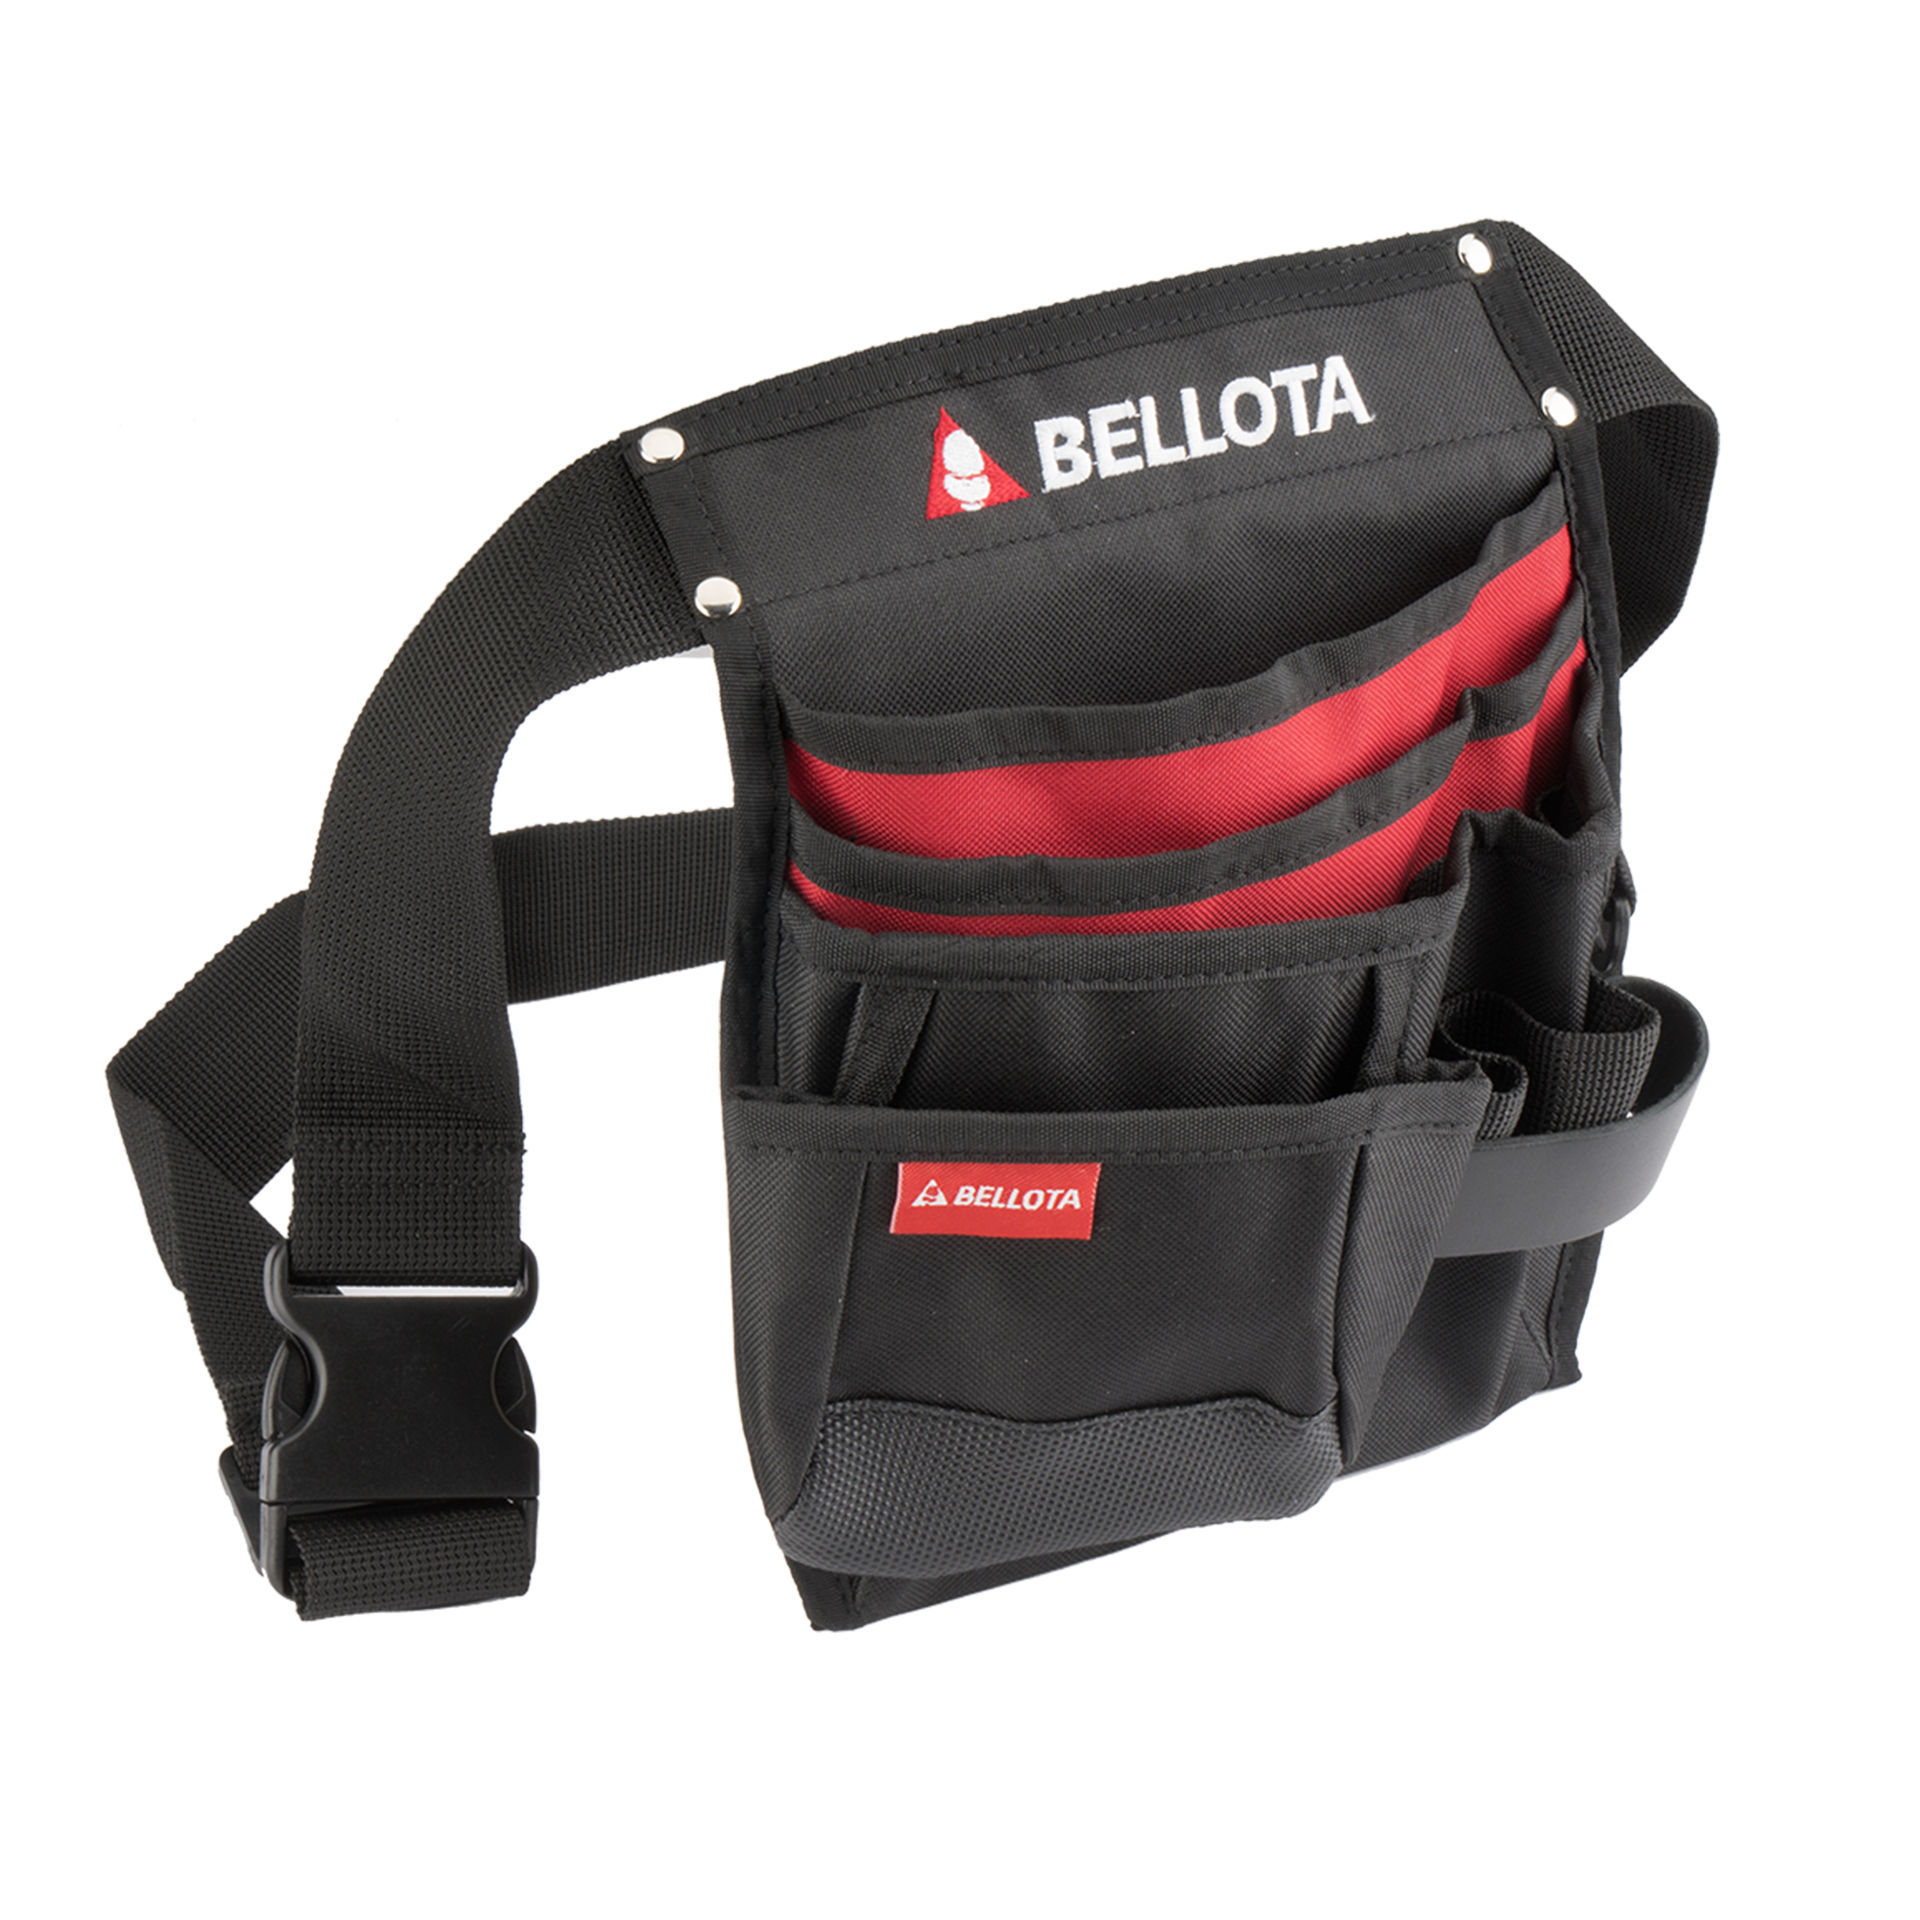 Cinturón porta herramientas Bellota 4 bolsillos - Suministros Urquiza